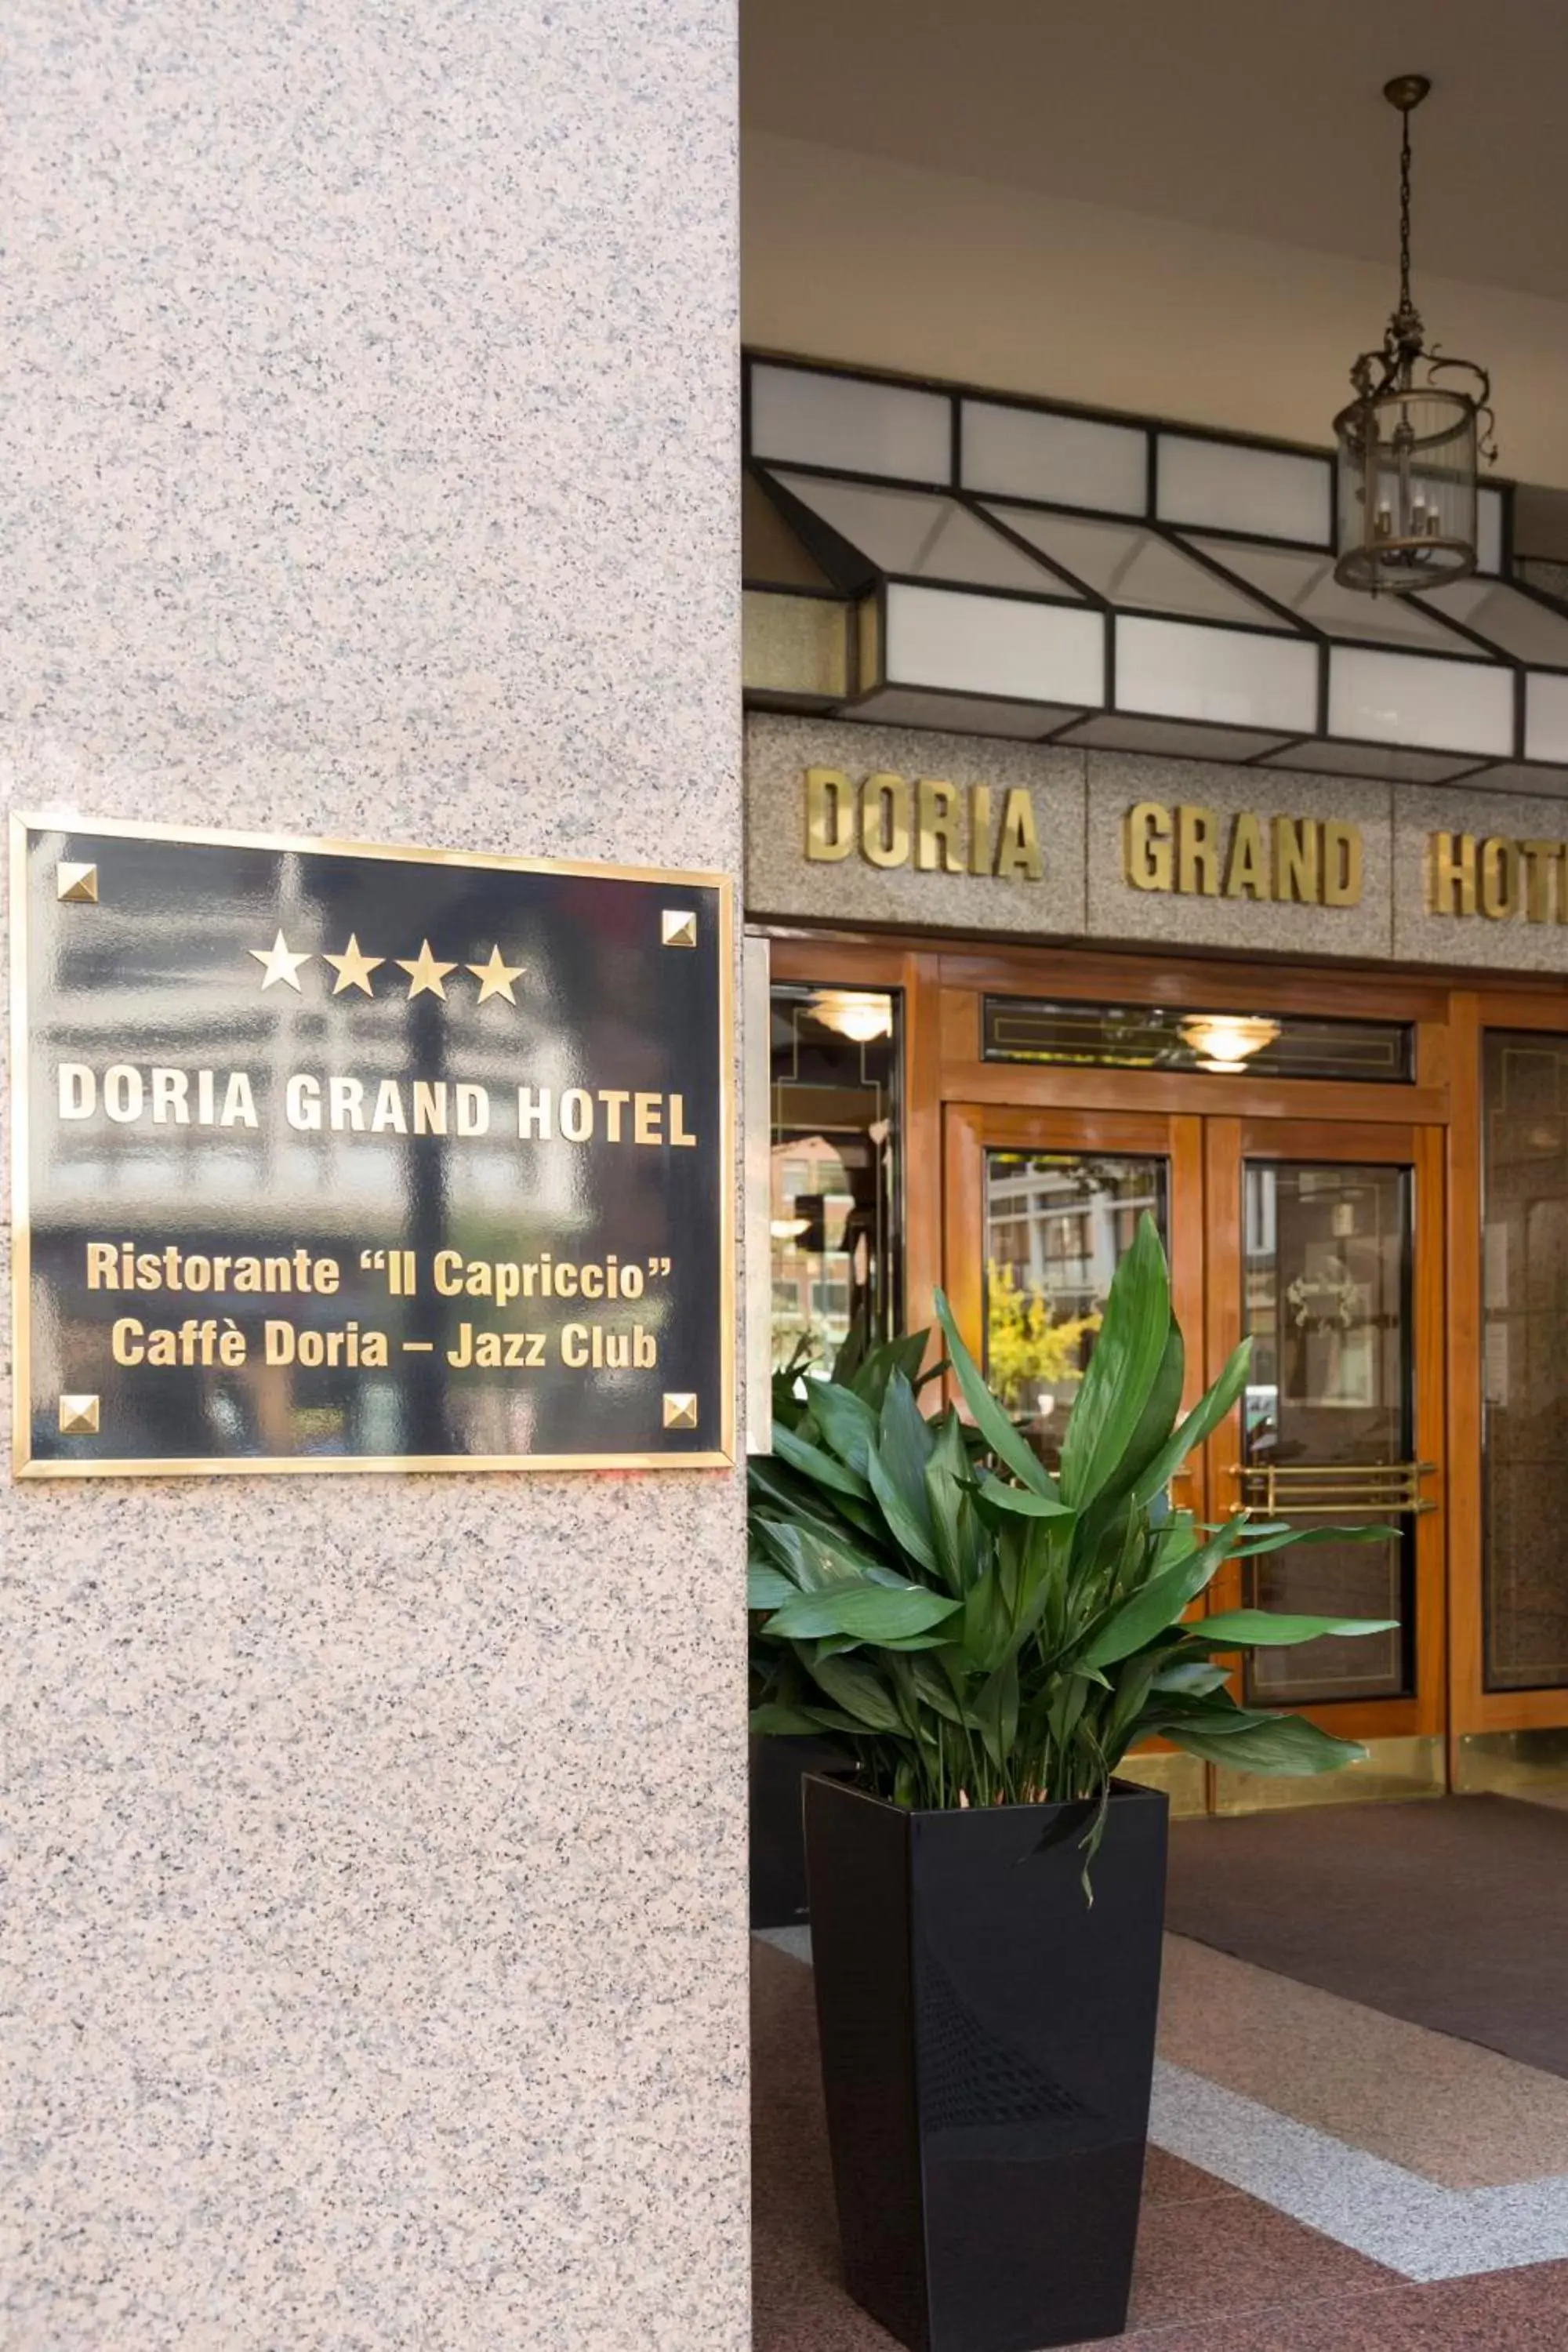 Property building in Doria Grand Hotel